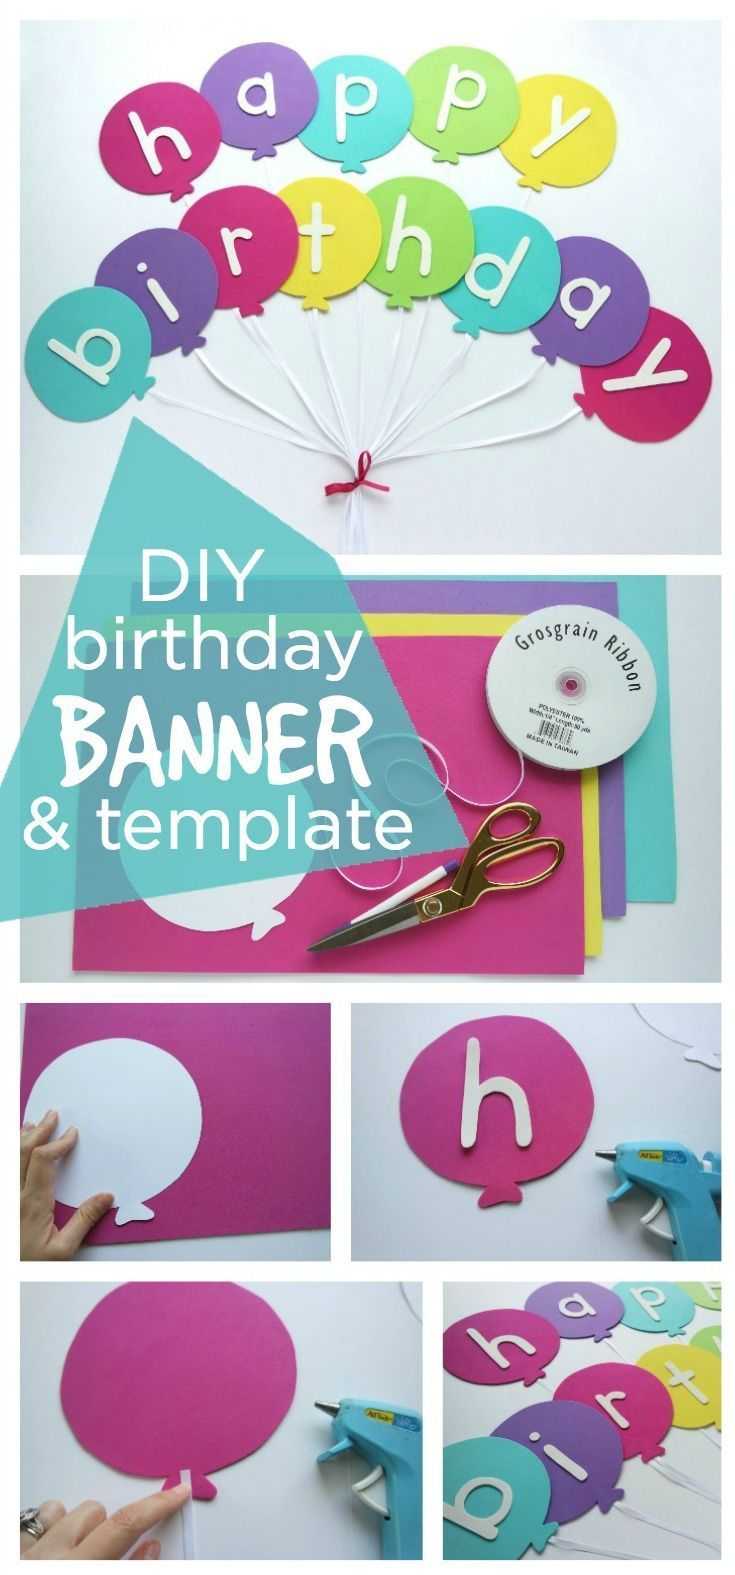 Happy Birthday Banner Diy Template | Birthday Banner In Diy Party Banner Template